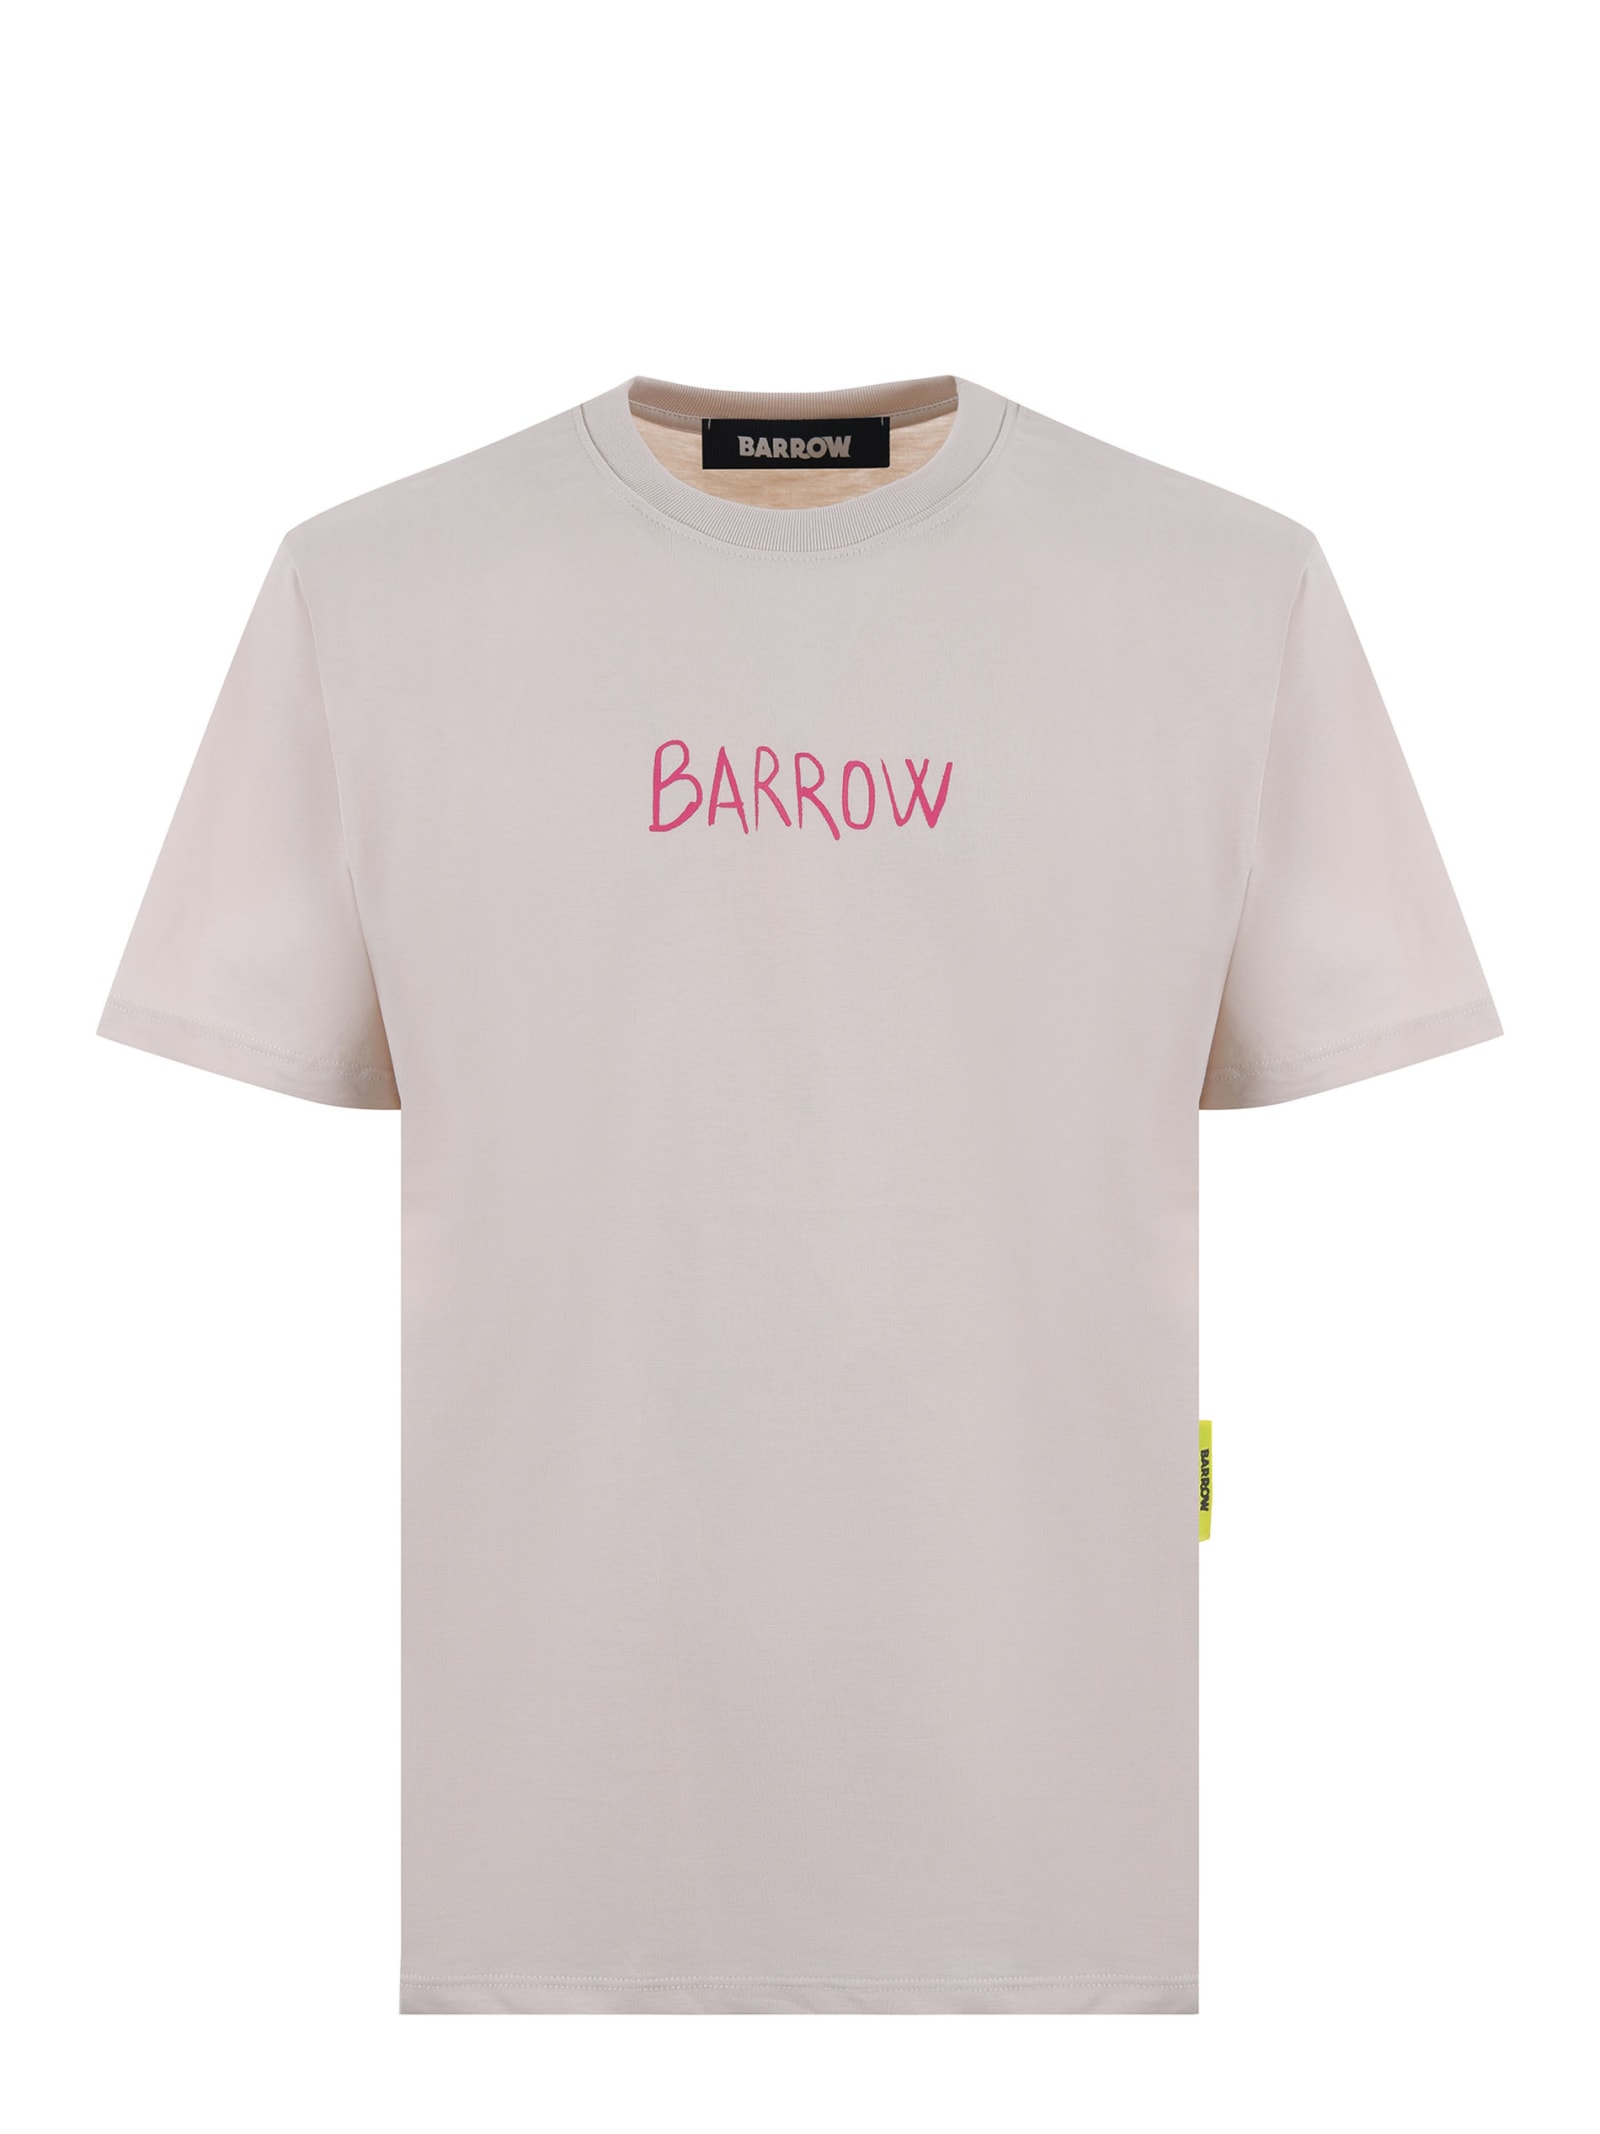 Barrow T-shirt In Sand